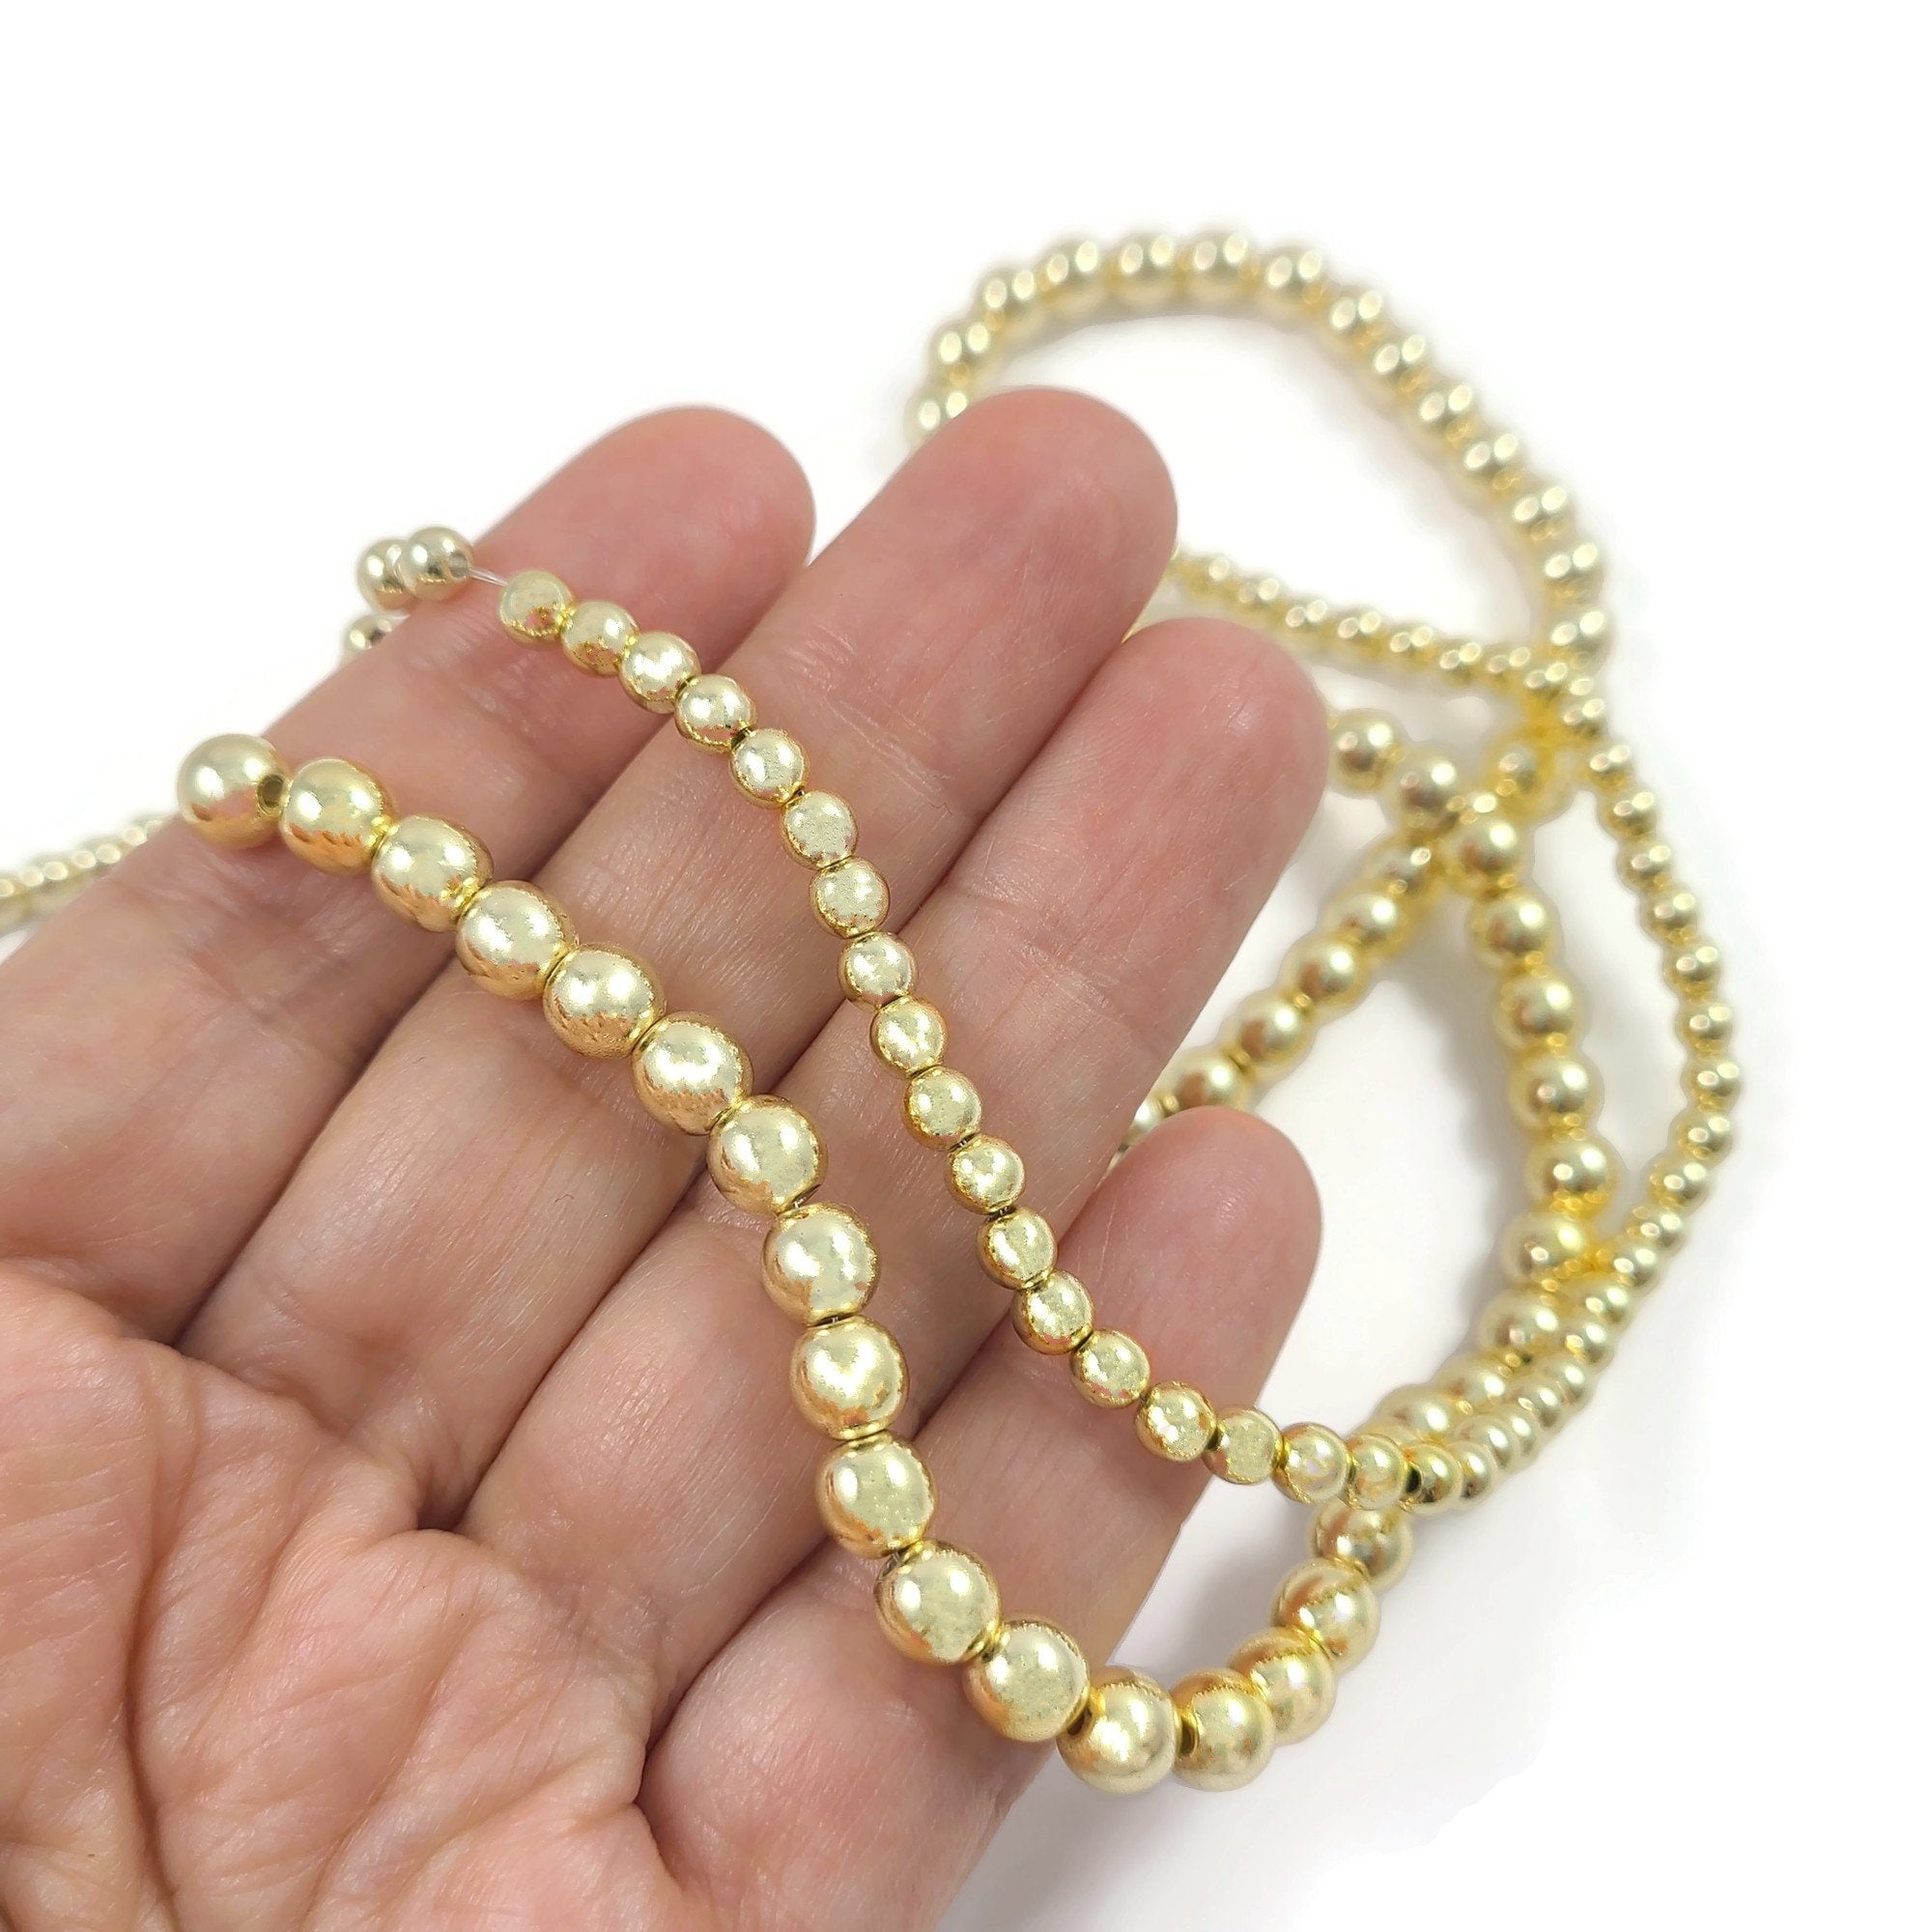 Gold hematite beads, 3mm, 4mm, 6mm, 8mm, Round gemstone spacer beads, Jewelry making supplies